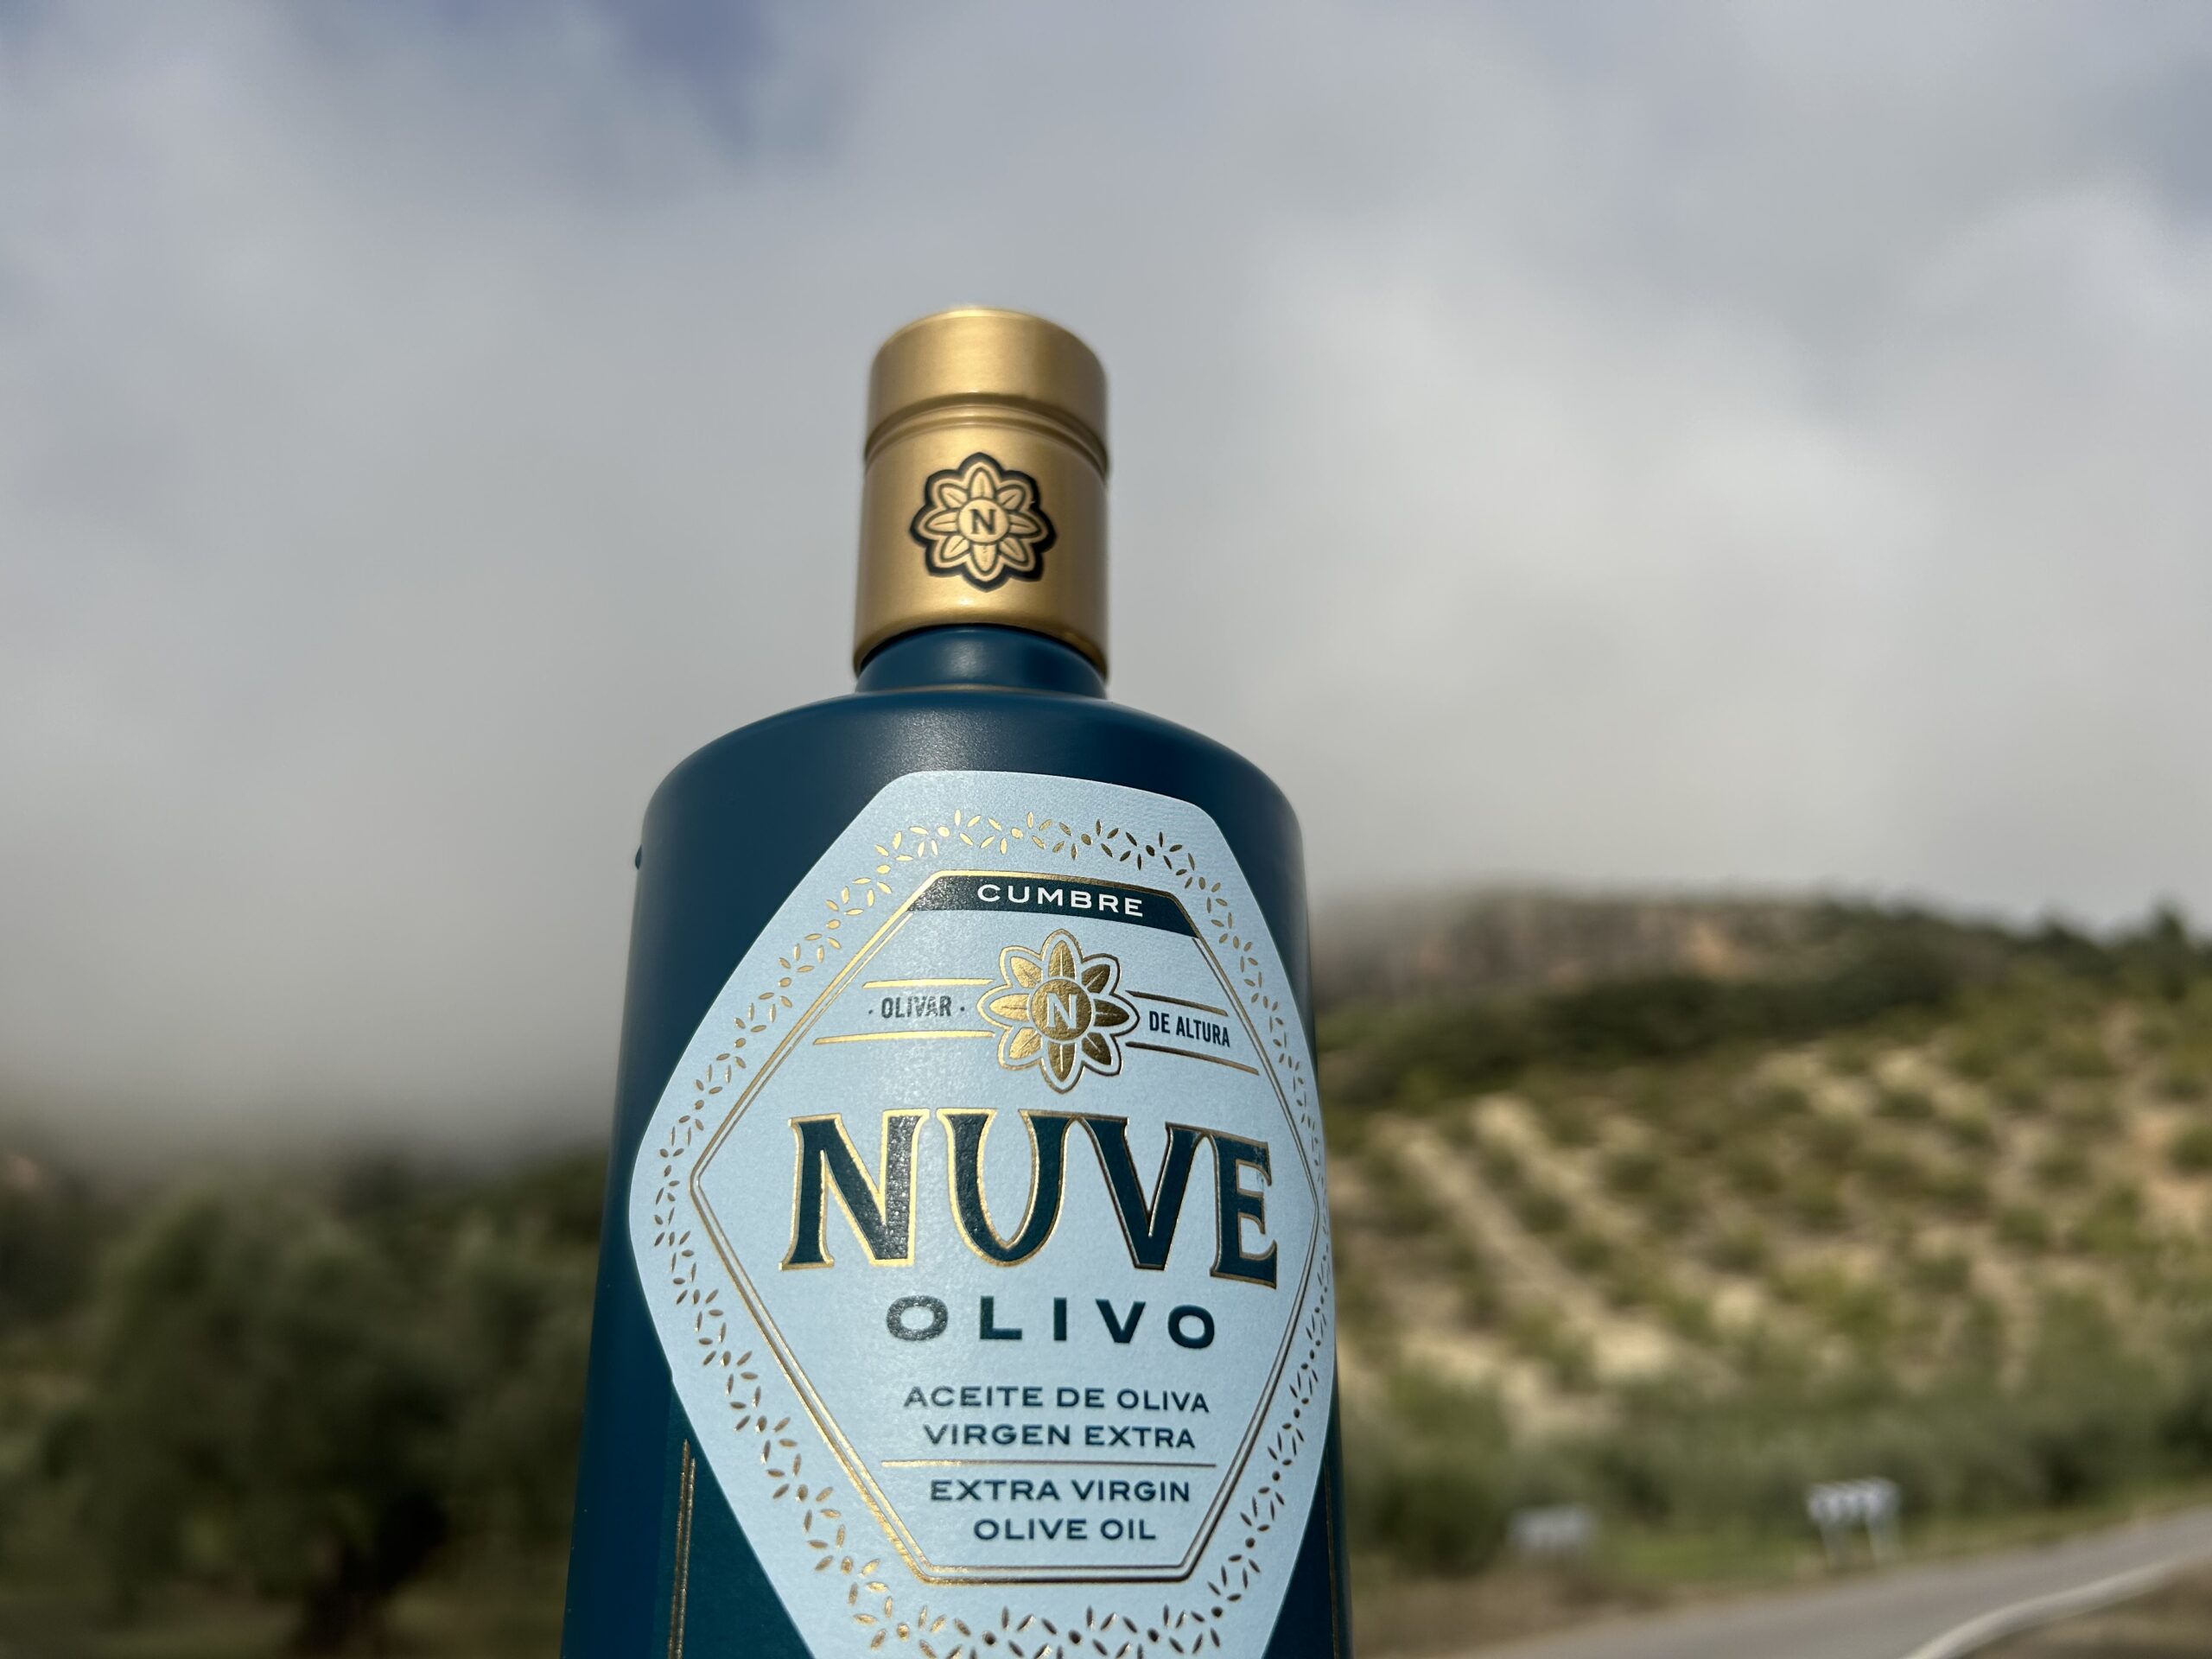 Nuve olivo diseño etiqueta aceite oliva